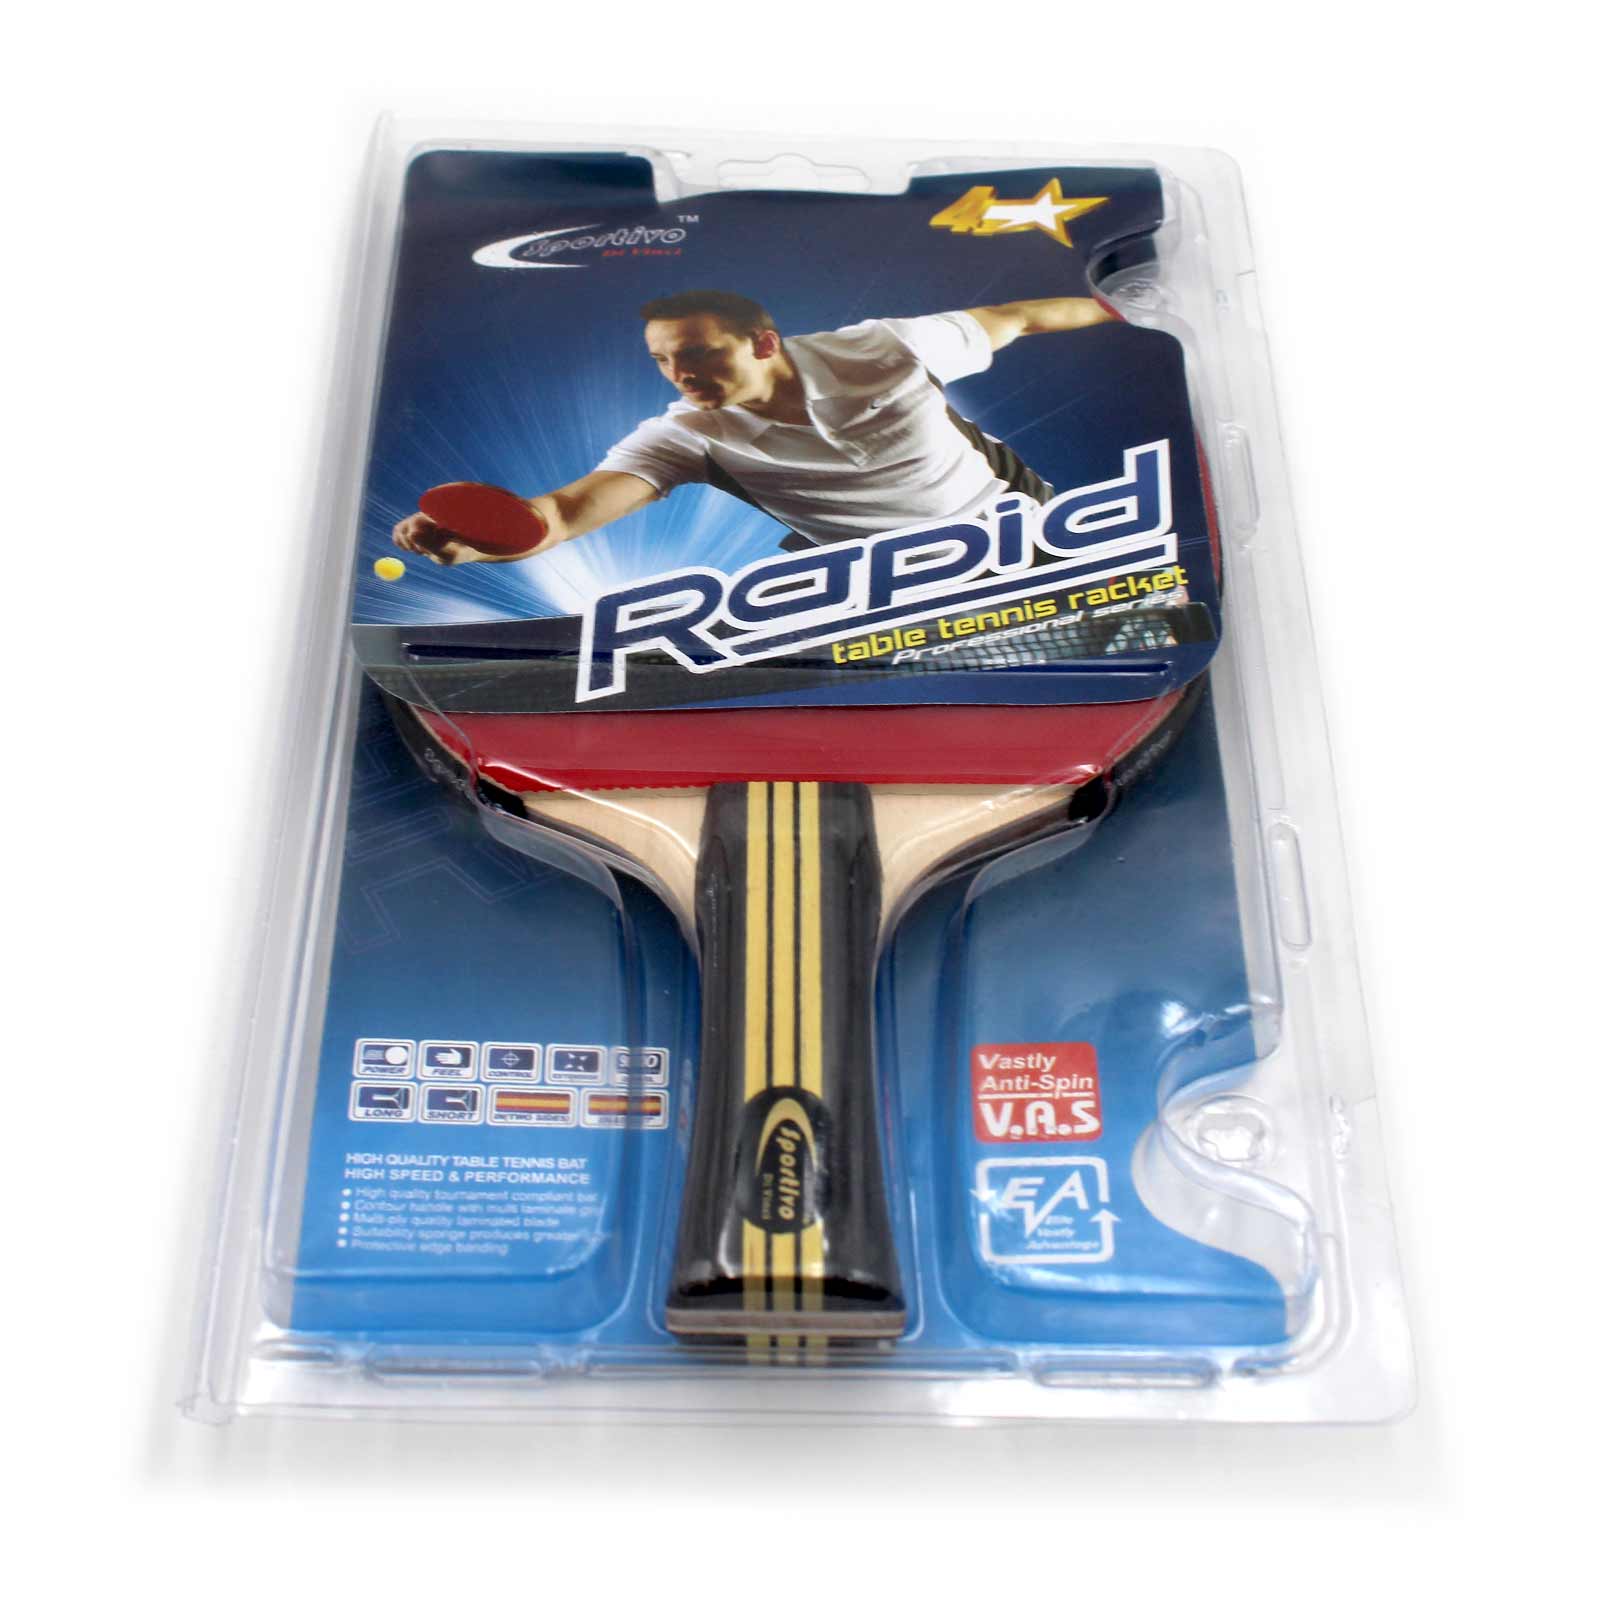 Rapid table tennis racket Professional seires - 4 stars